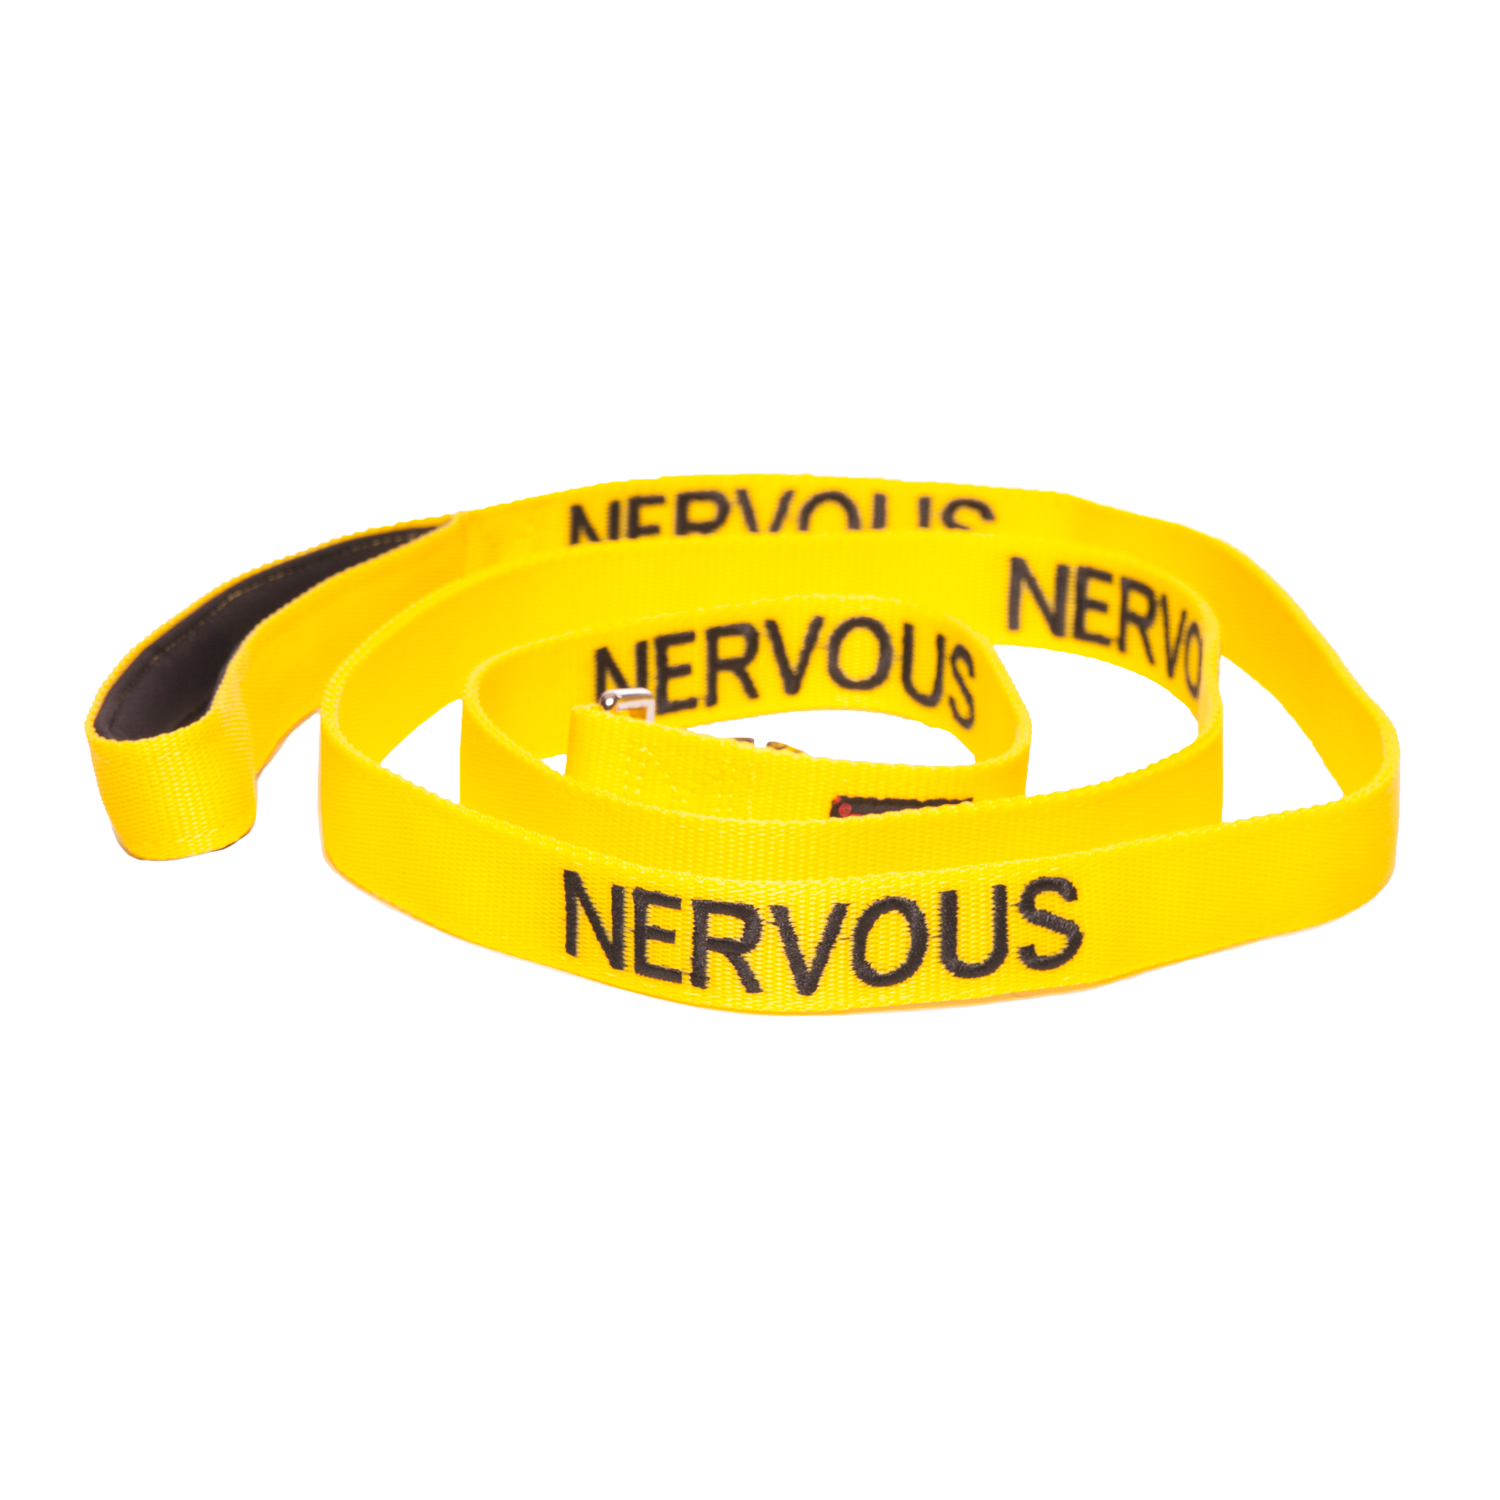 Dexil Friendly Dog Collars yellow NERVOUS 180cm (6ft) Lead